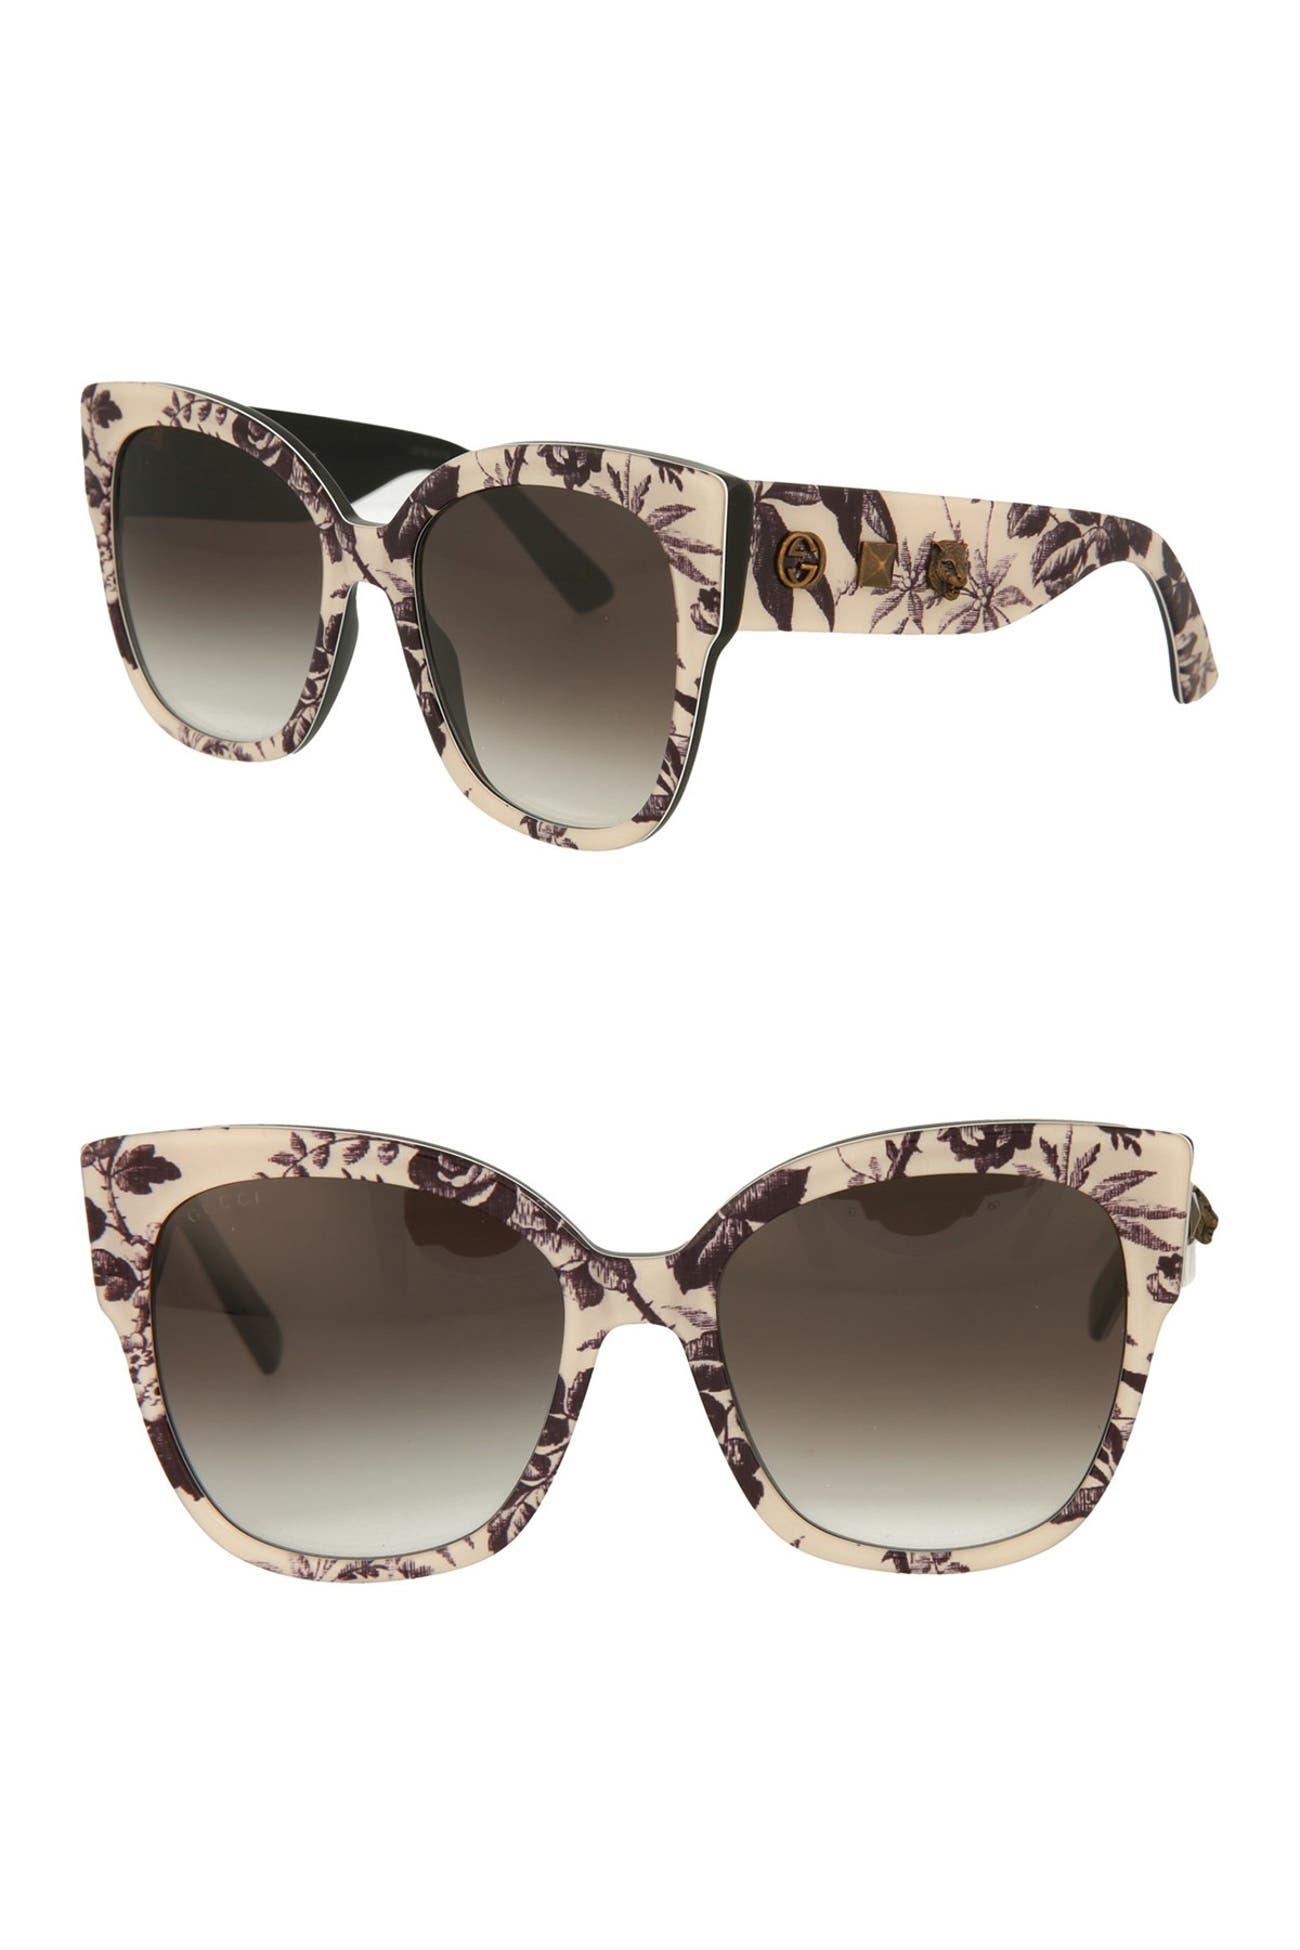 GUCCI | 55mm Square Sunglasses | Nordstrom Rack